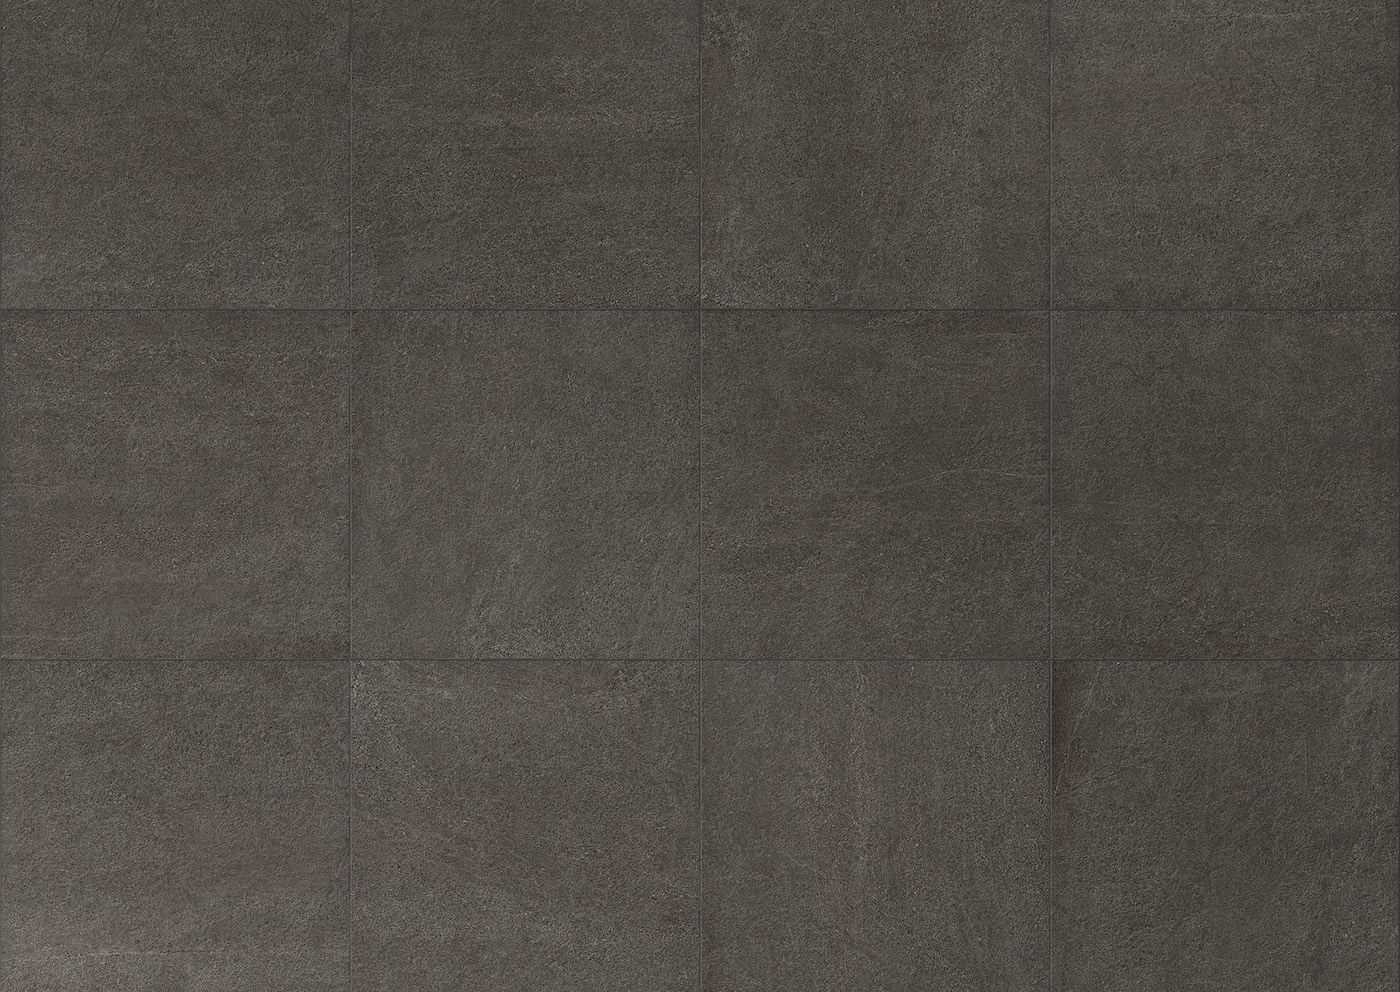 Topstone anthracite 60x60 2cm outdoor flooring